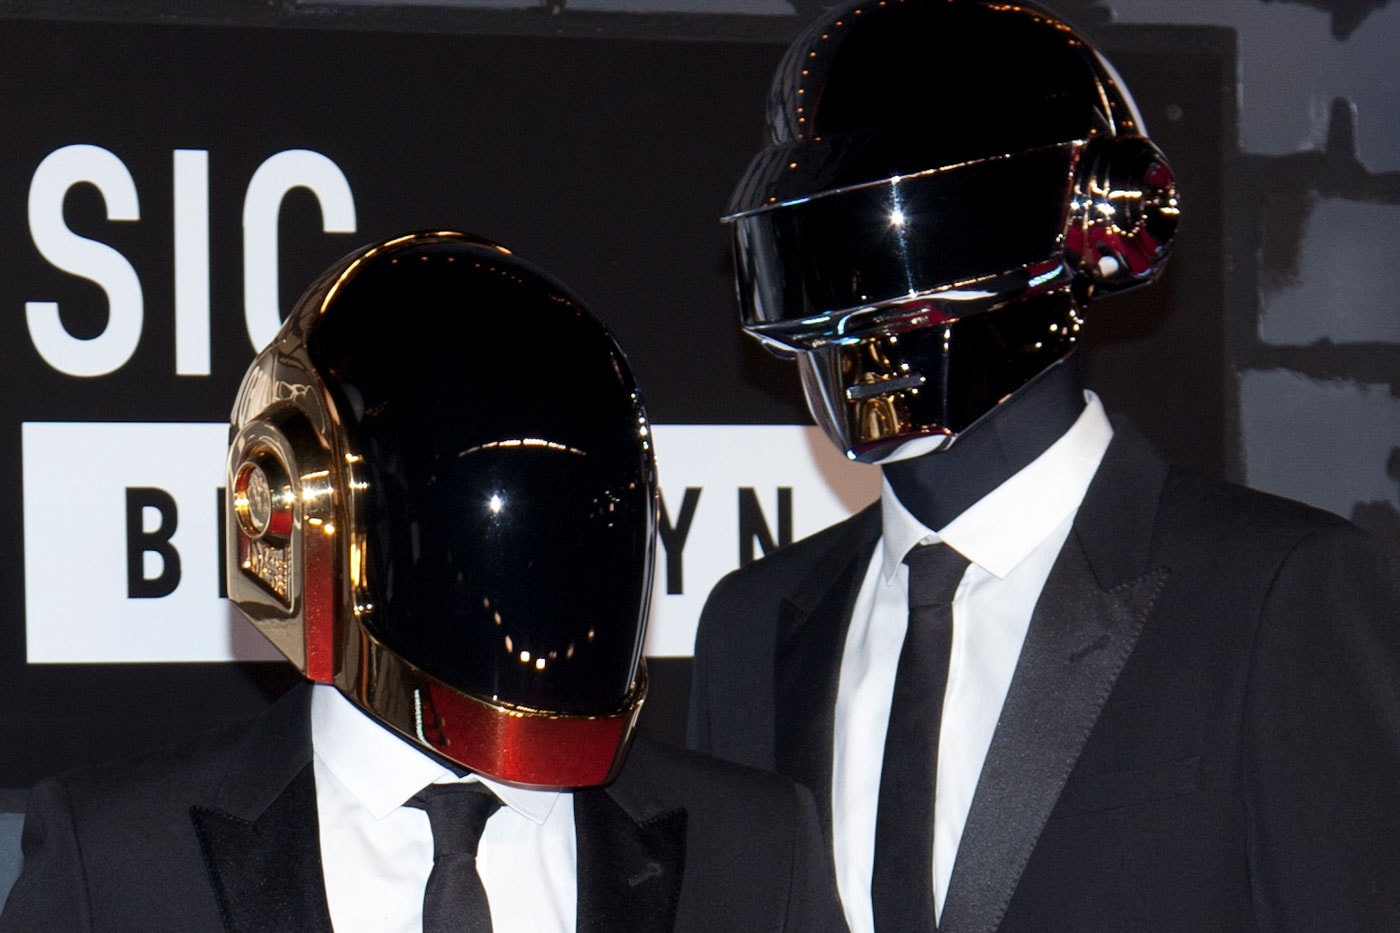 Daft Punk - Tron Legacy (End Titles)